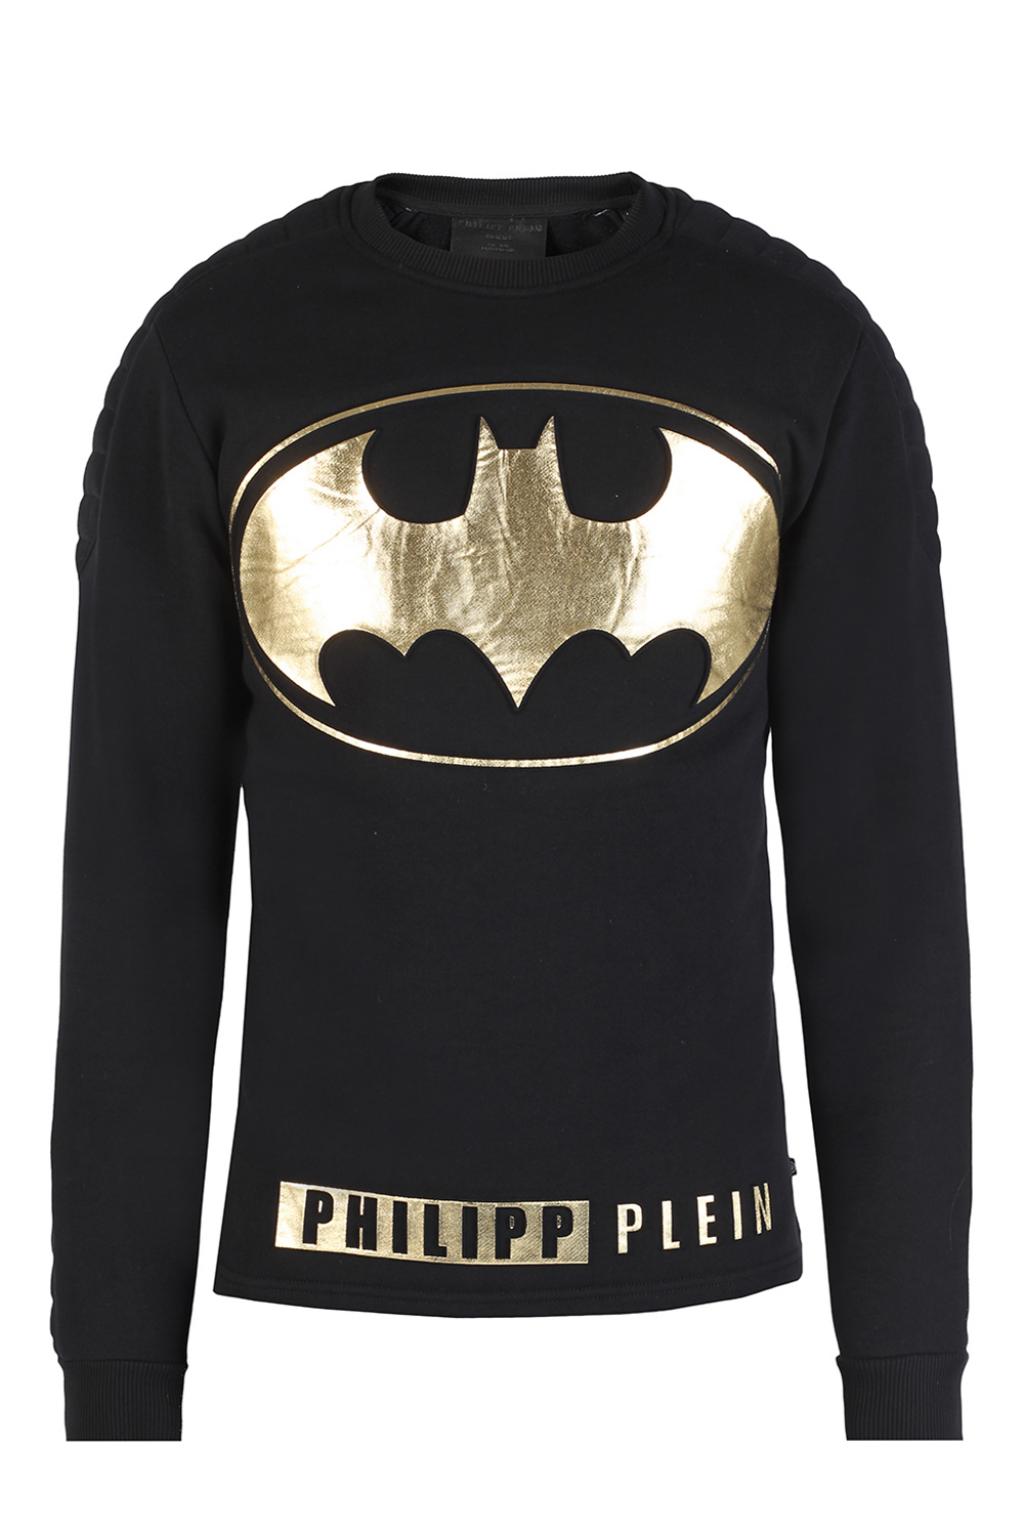 philipp plein batman t shirt